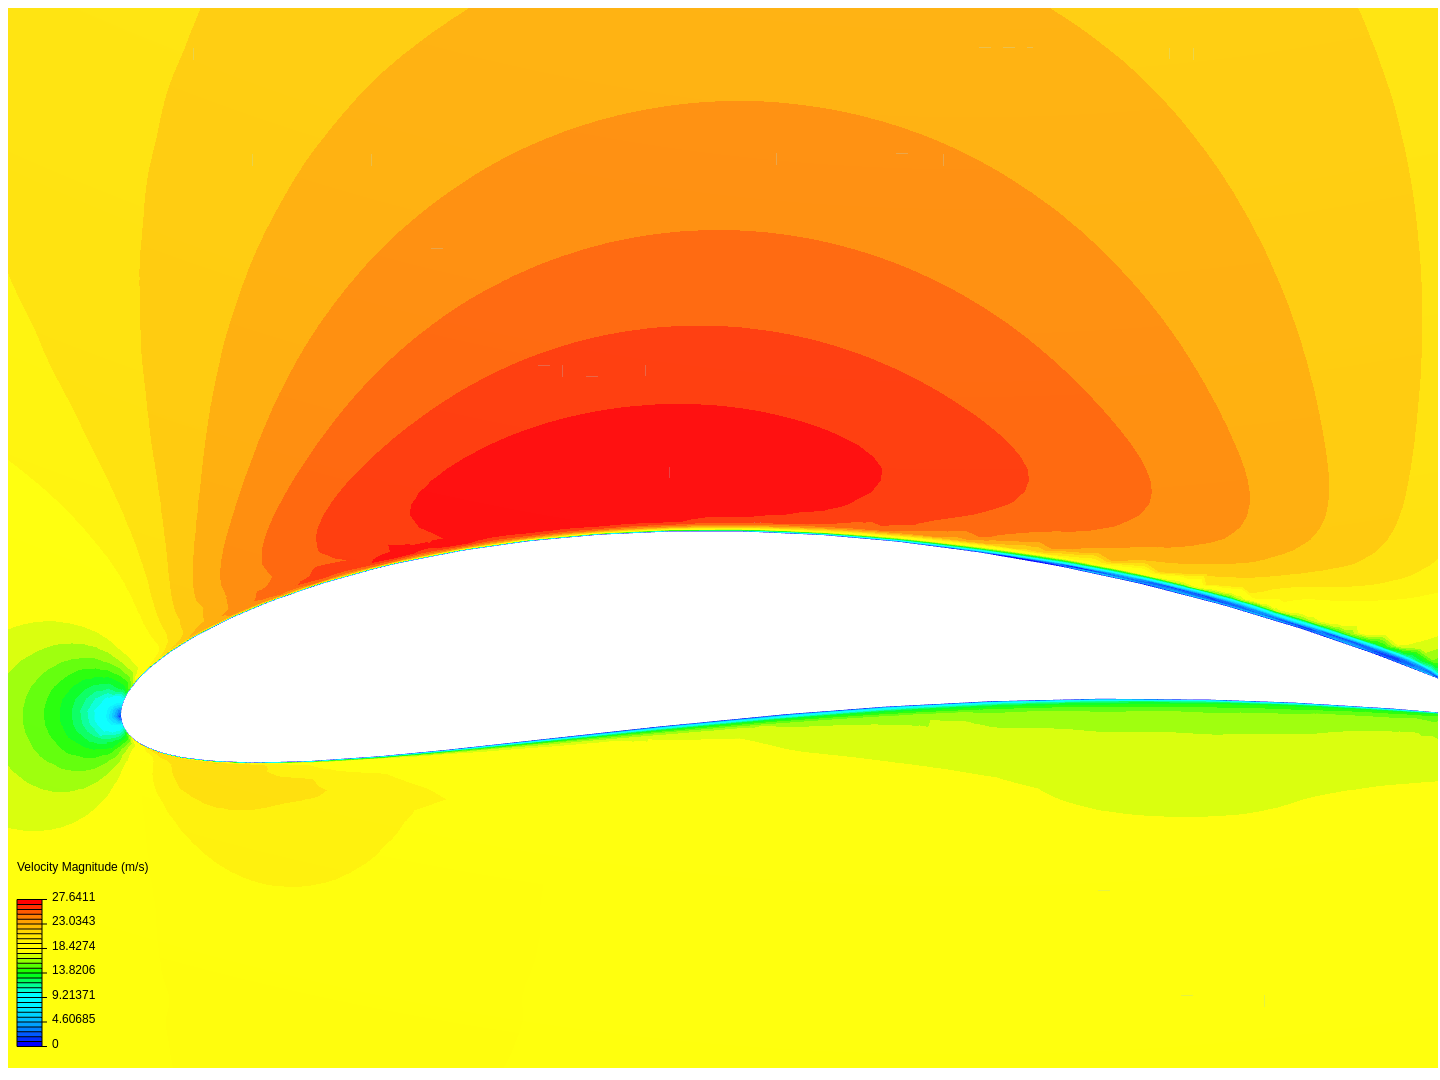 Airfoil analysis image